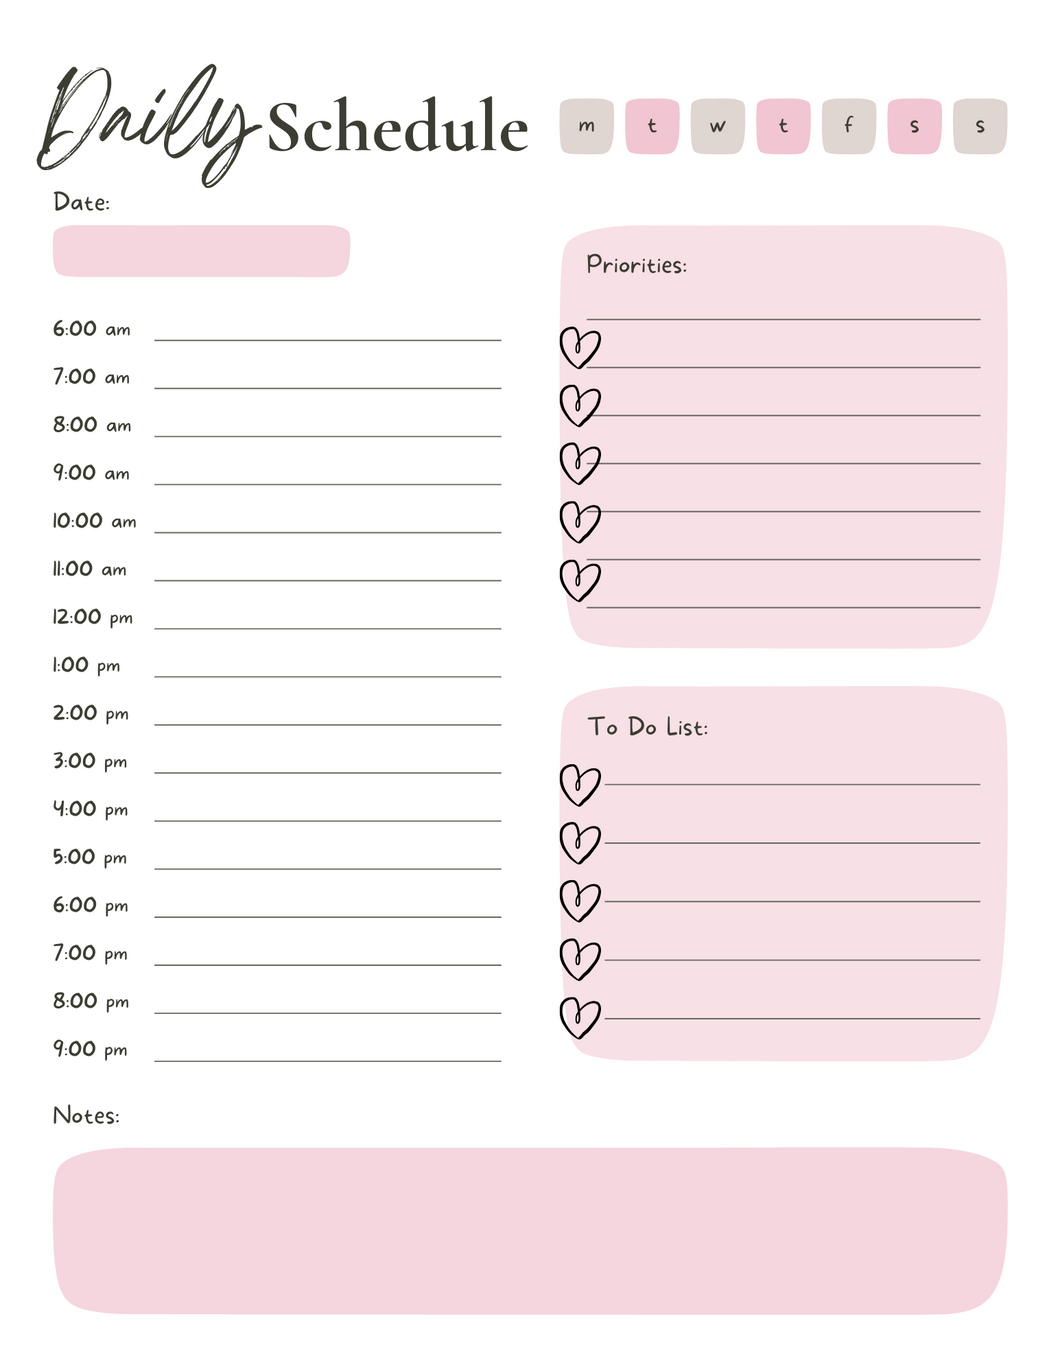 Daily Schedule Digital Planner Printable